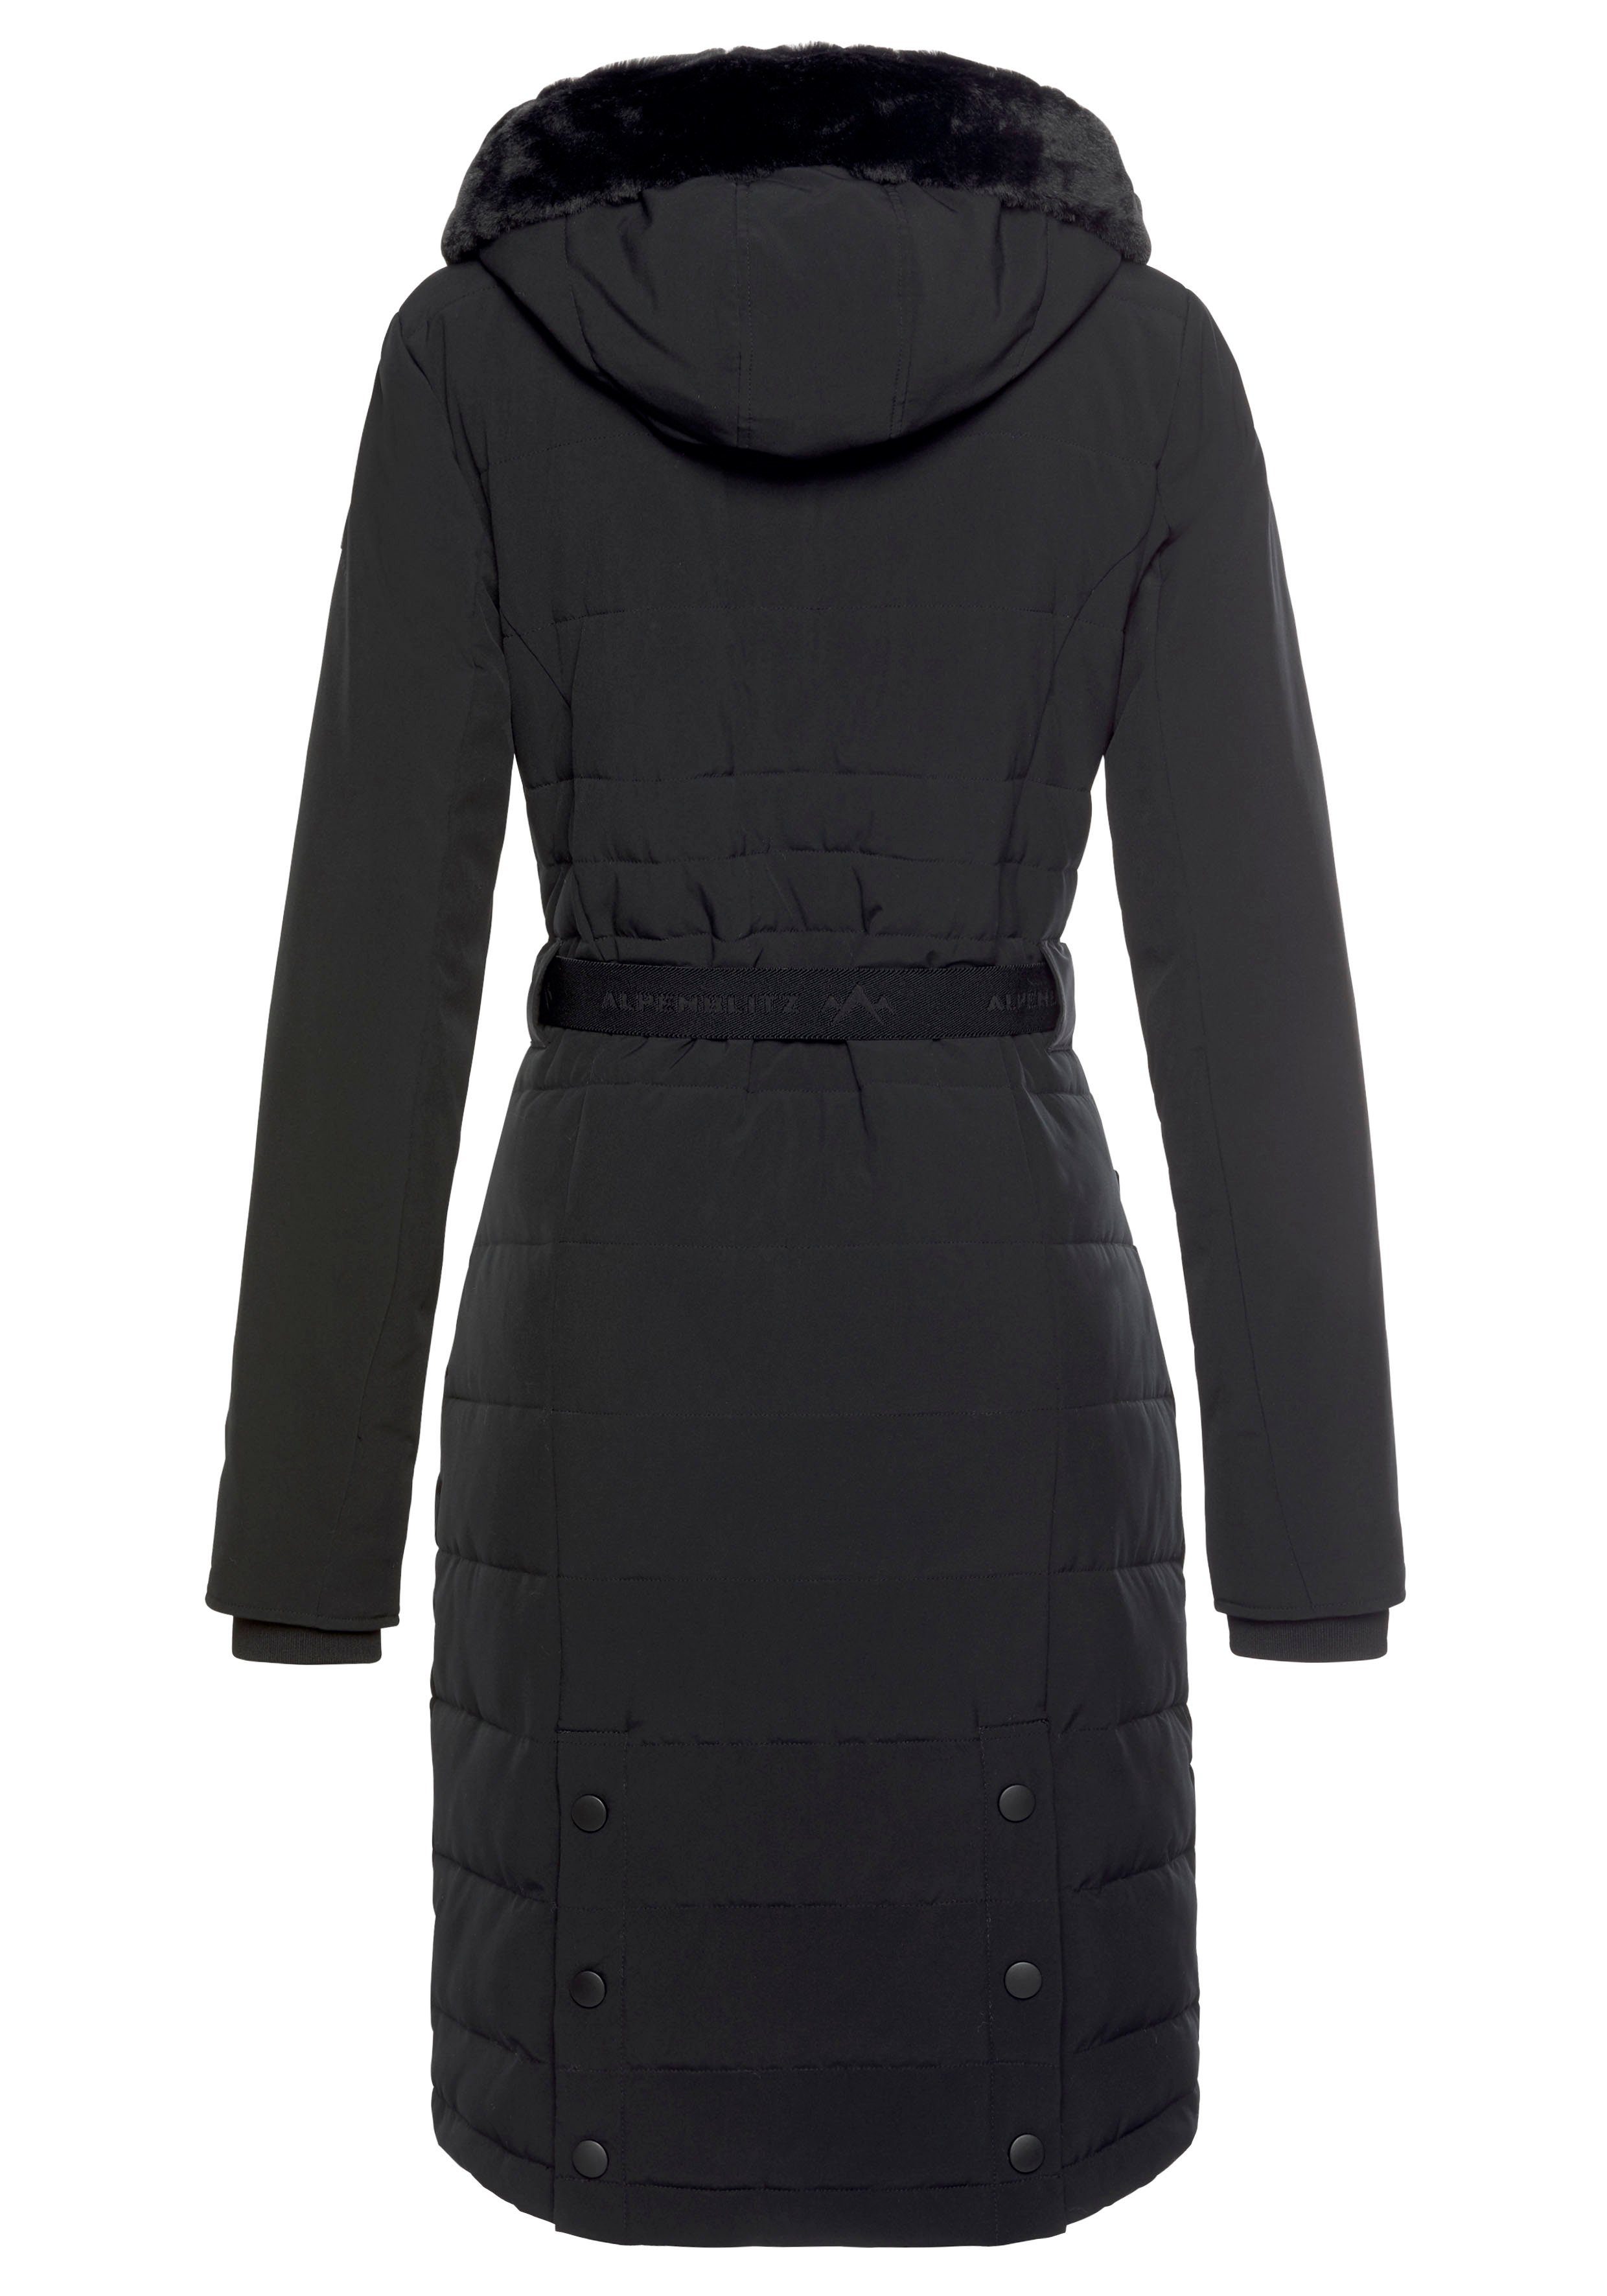 black Gürtel ALPENBLITZ Oslo nachhaltigem & Steppmantel long aus auf (Jacke abnehmbarer Kuschel-Kapuze dem Markenprägung Material) Mantel mit